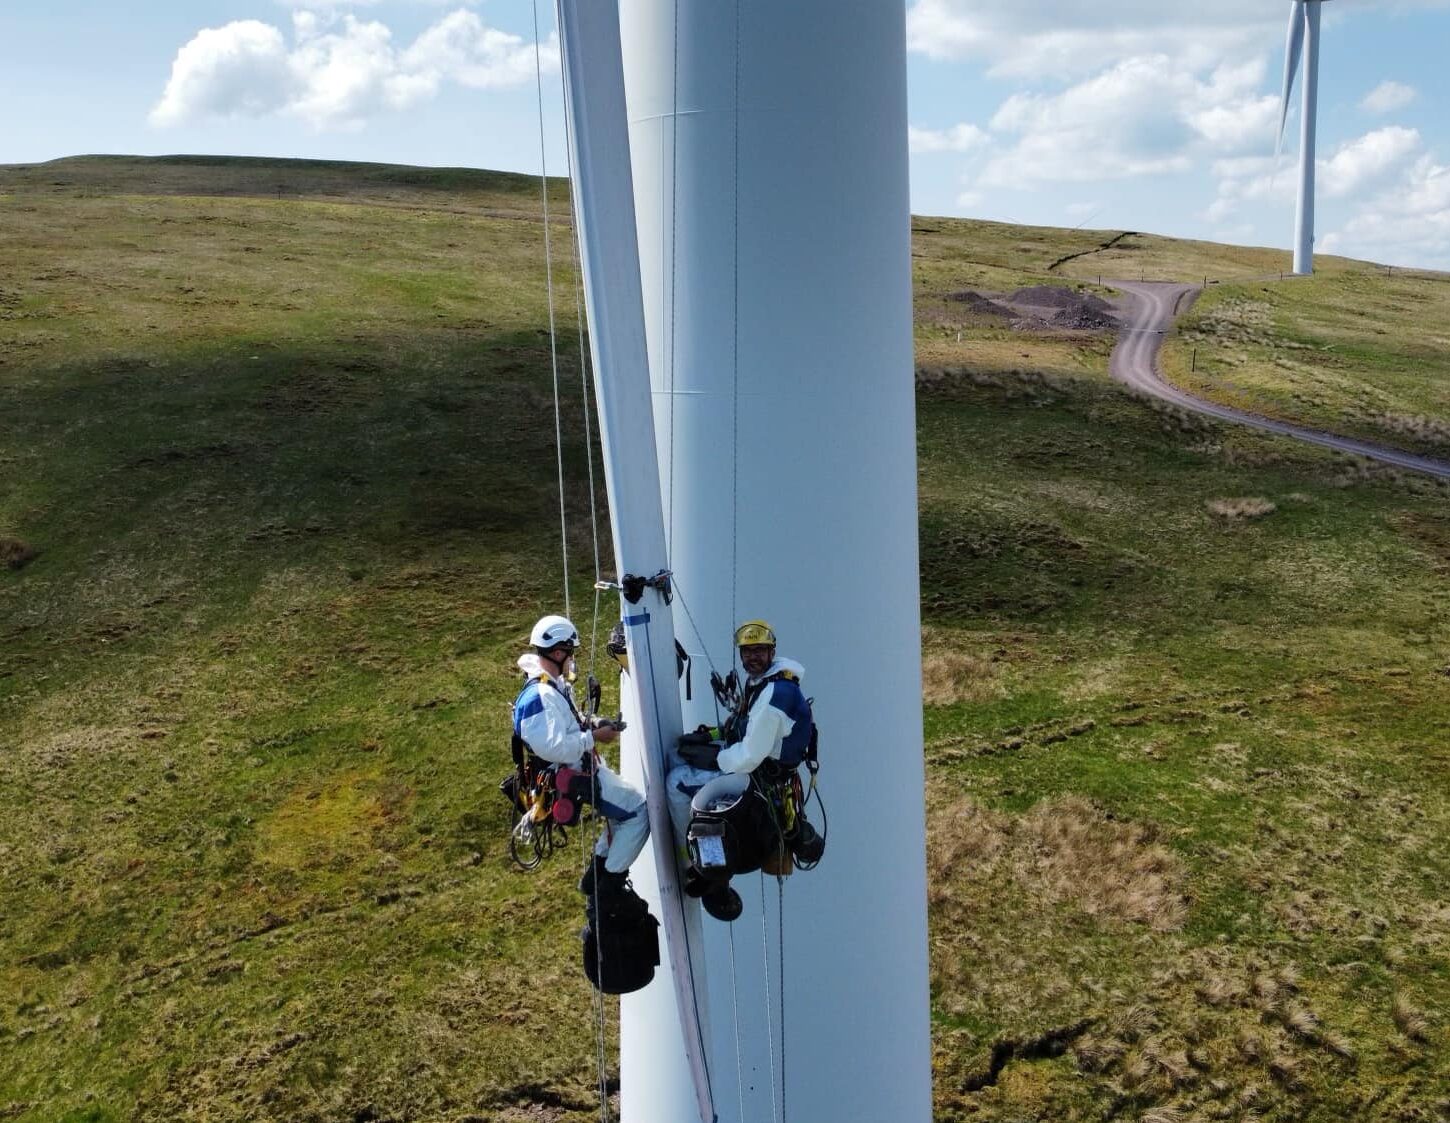 wind blade inspection, wind blade repair, wind turbine maintenance